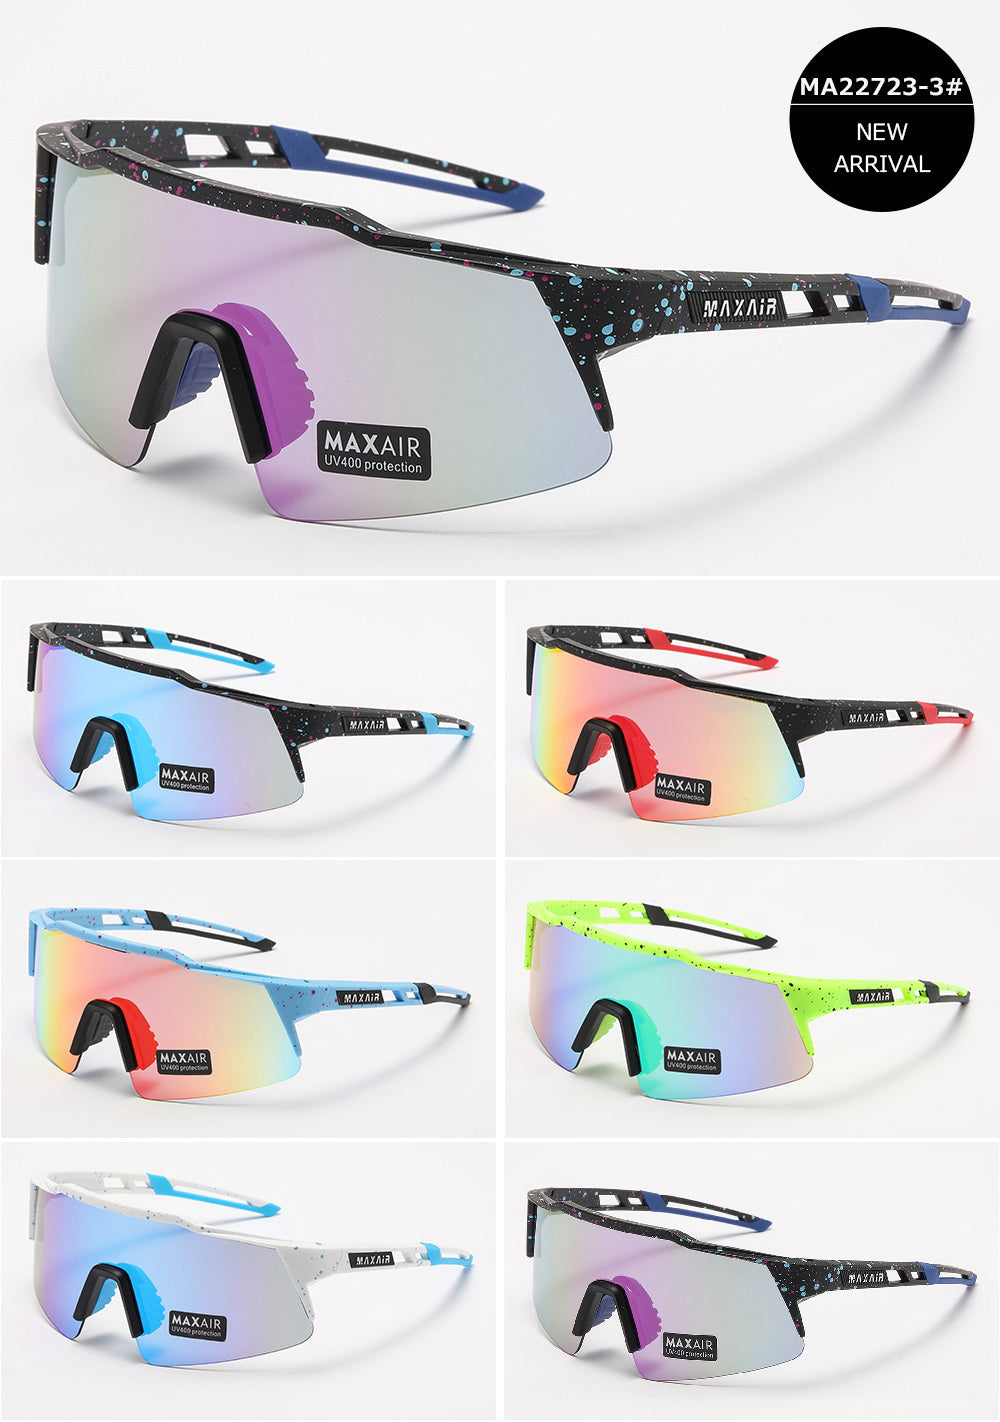 Maxair 22723-3 Sunglasses